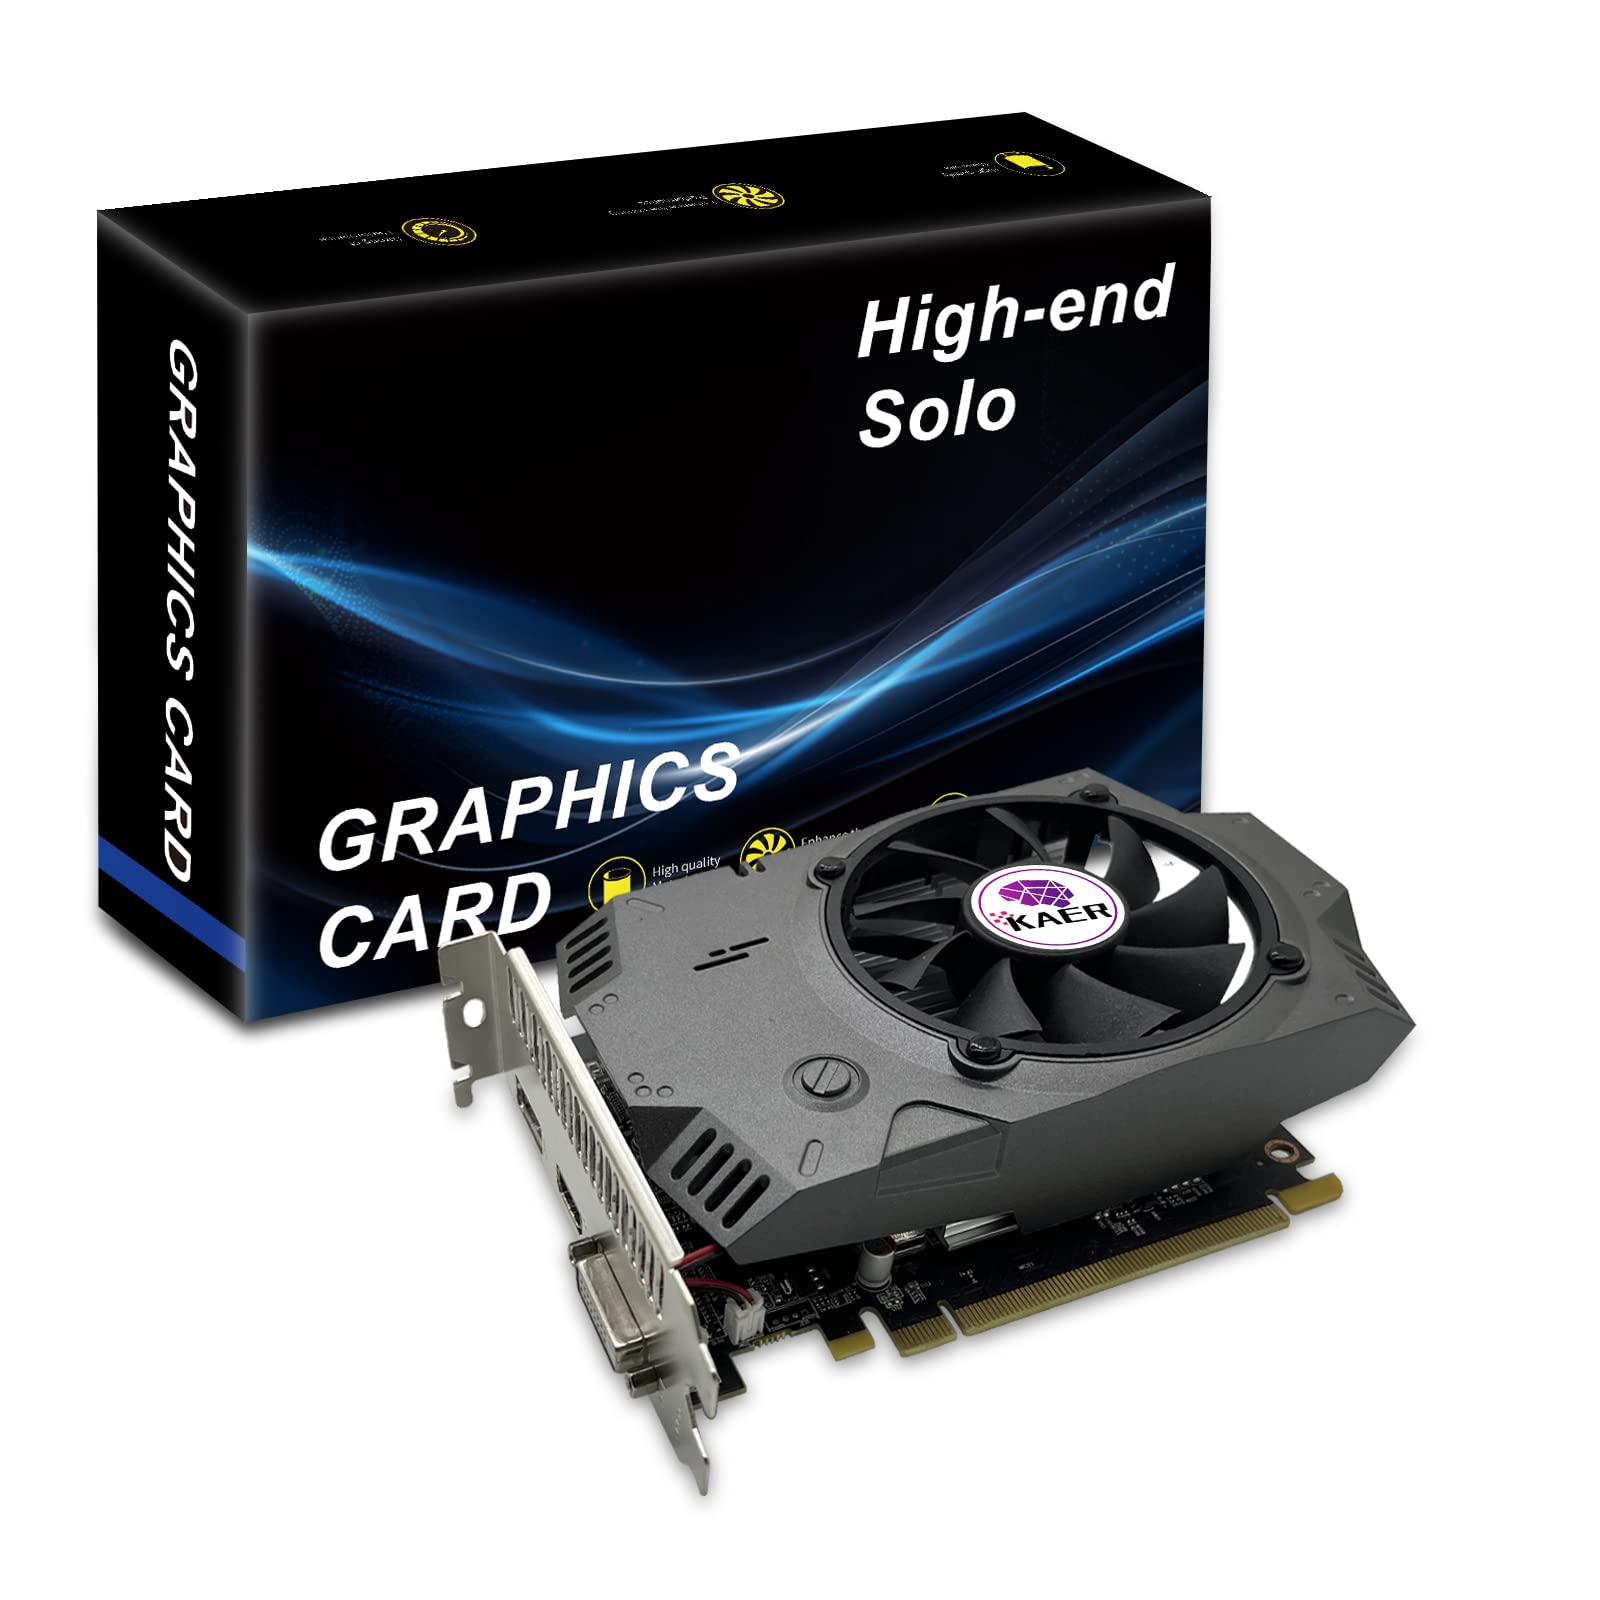 KAER AMD Radeon RX 550 Graphics Card 4GB GDDR5 128 Bit DirectX 12 PCI Express 3.0 X8 DP HDMI DVI-D Triple Links 4K Gaming PC